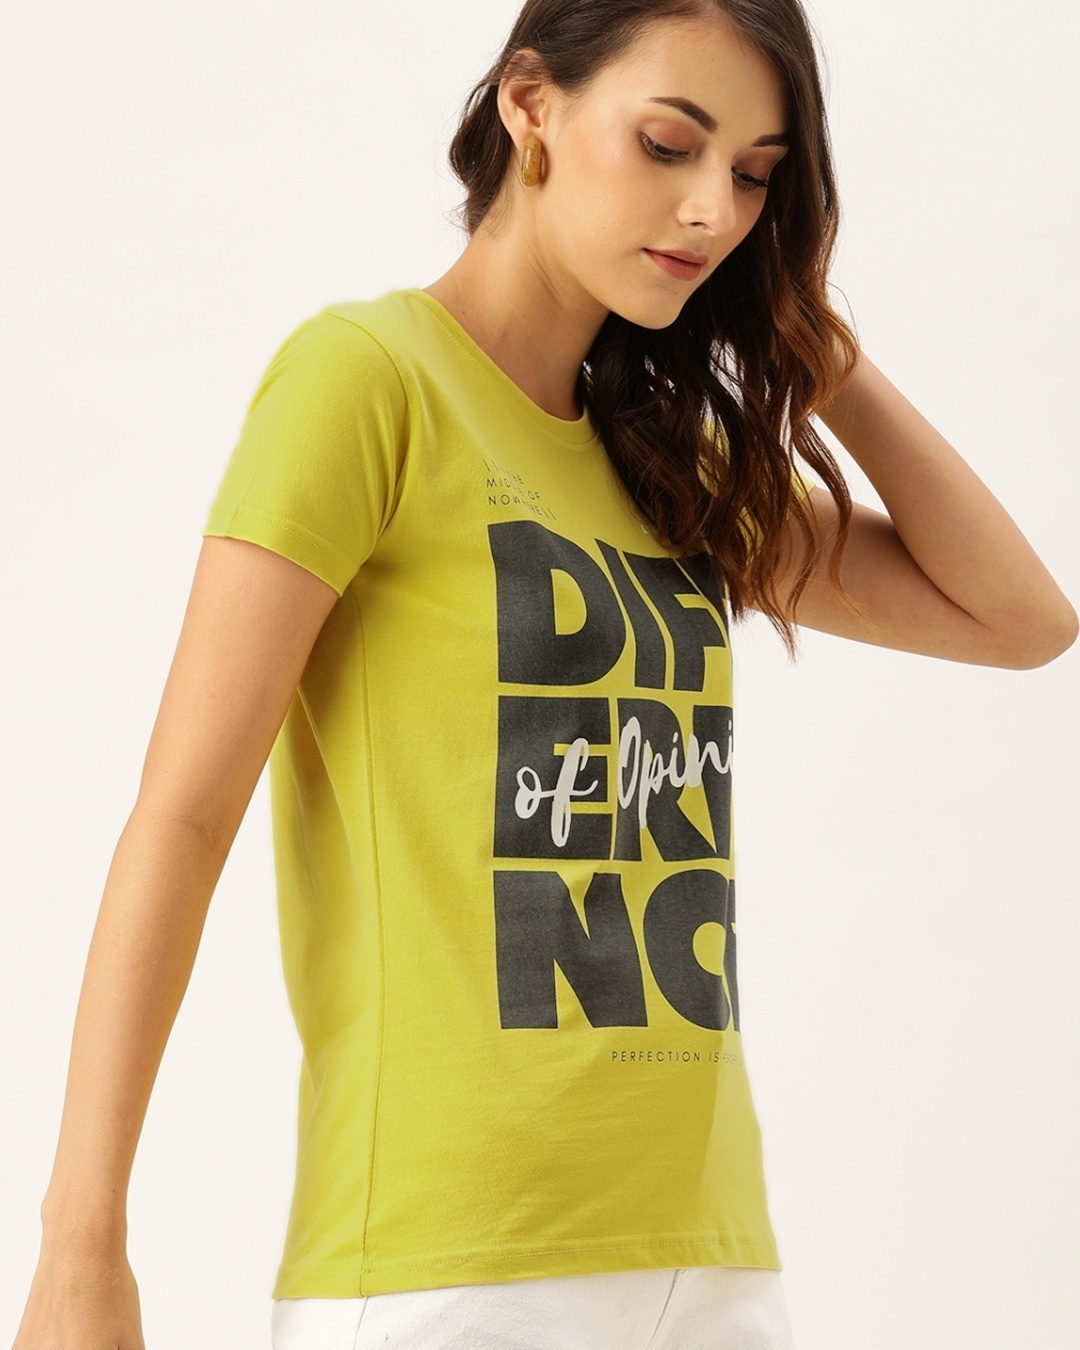 Shop Yellow Typographic T Shirt-Design